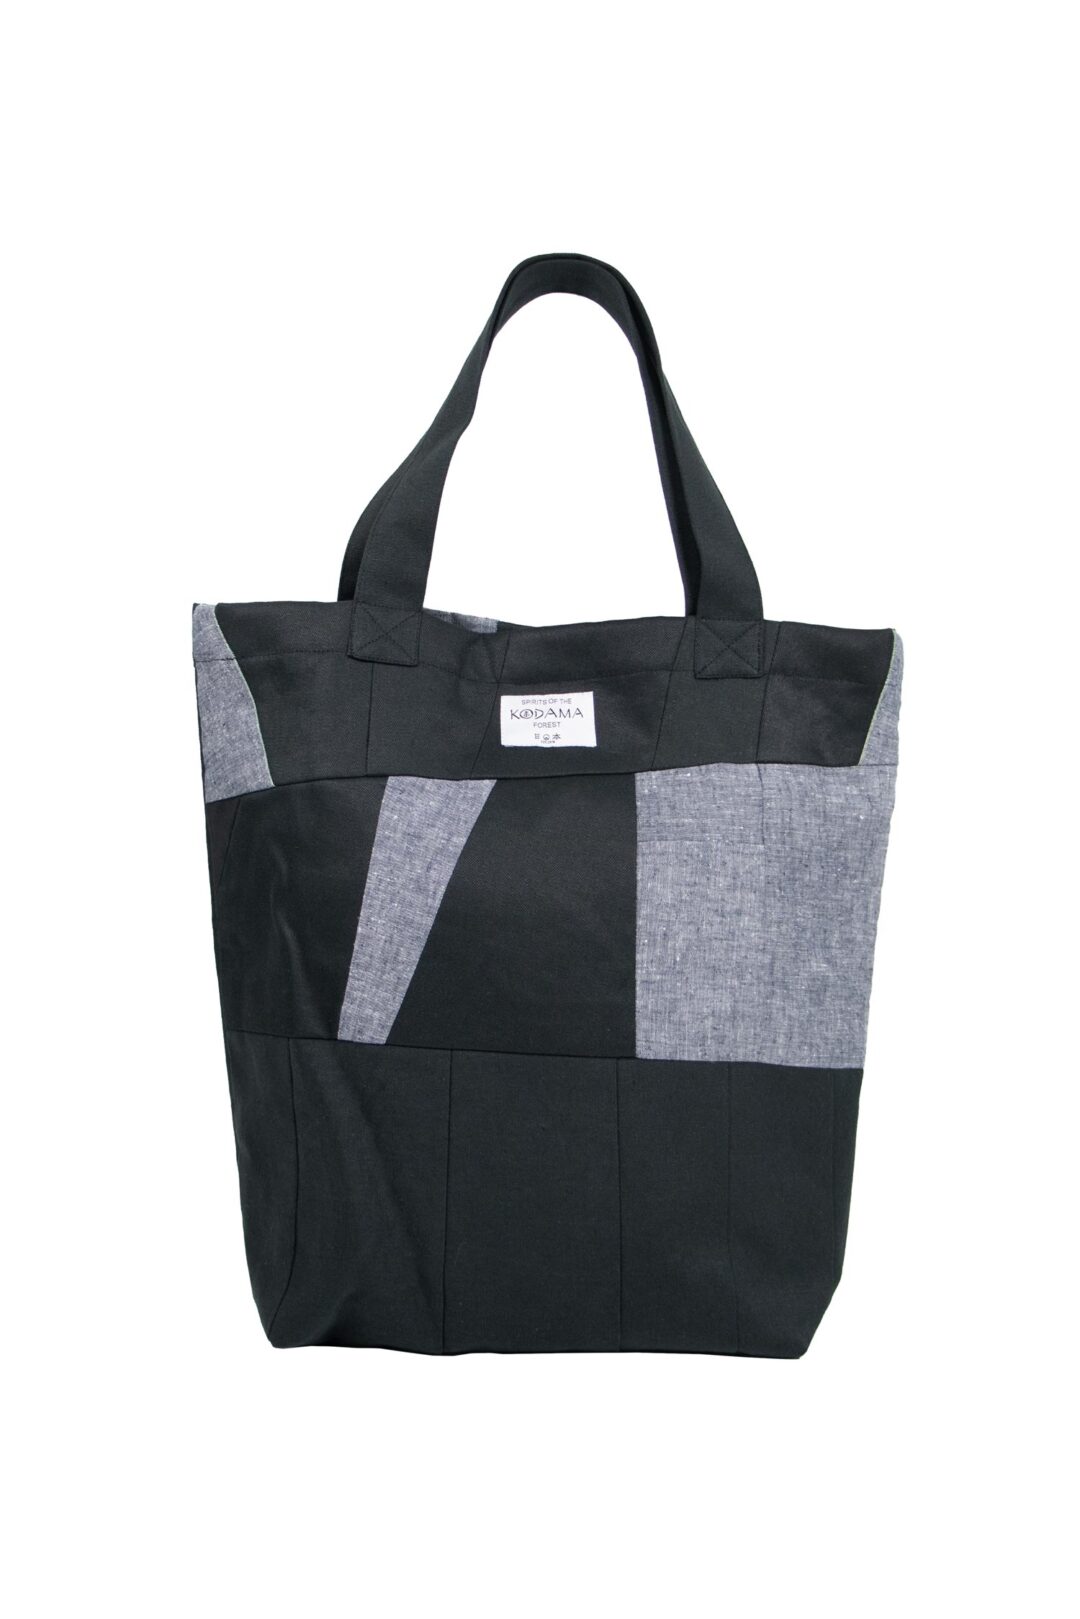 z06c-zero-waste-tote-bag-front